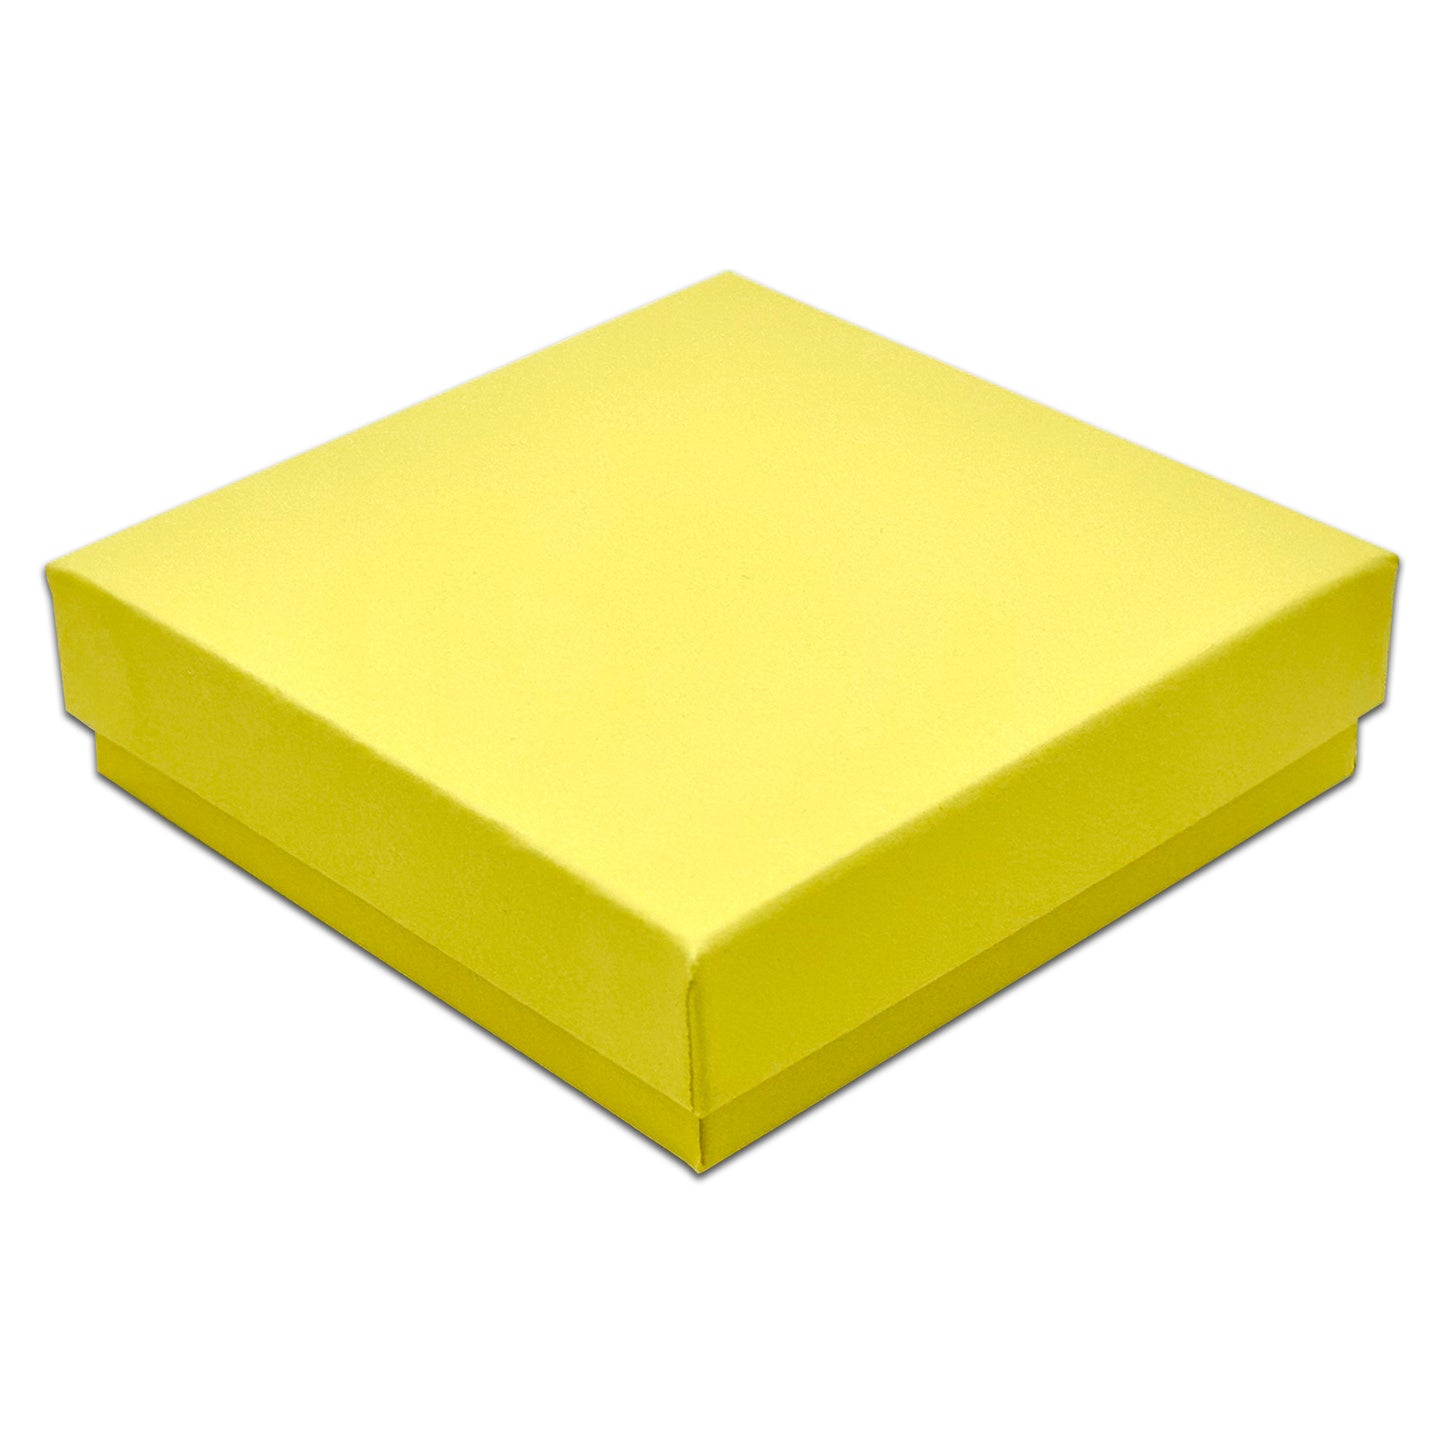 3 1/2" x 3 1/2" x 1" Mustard Yellow Cotton Filled Paper Box